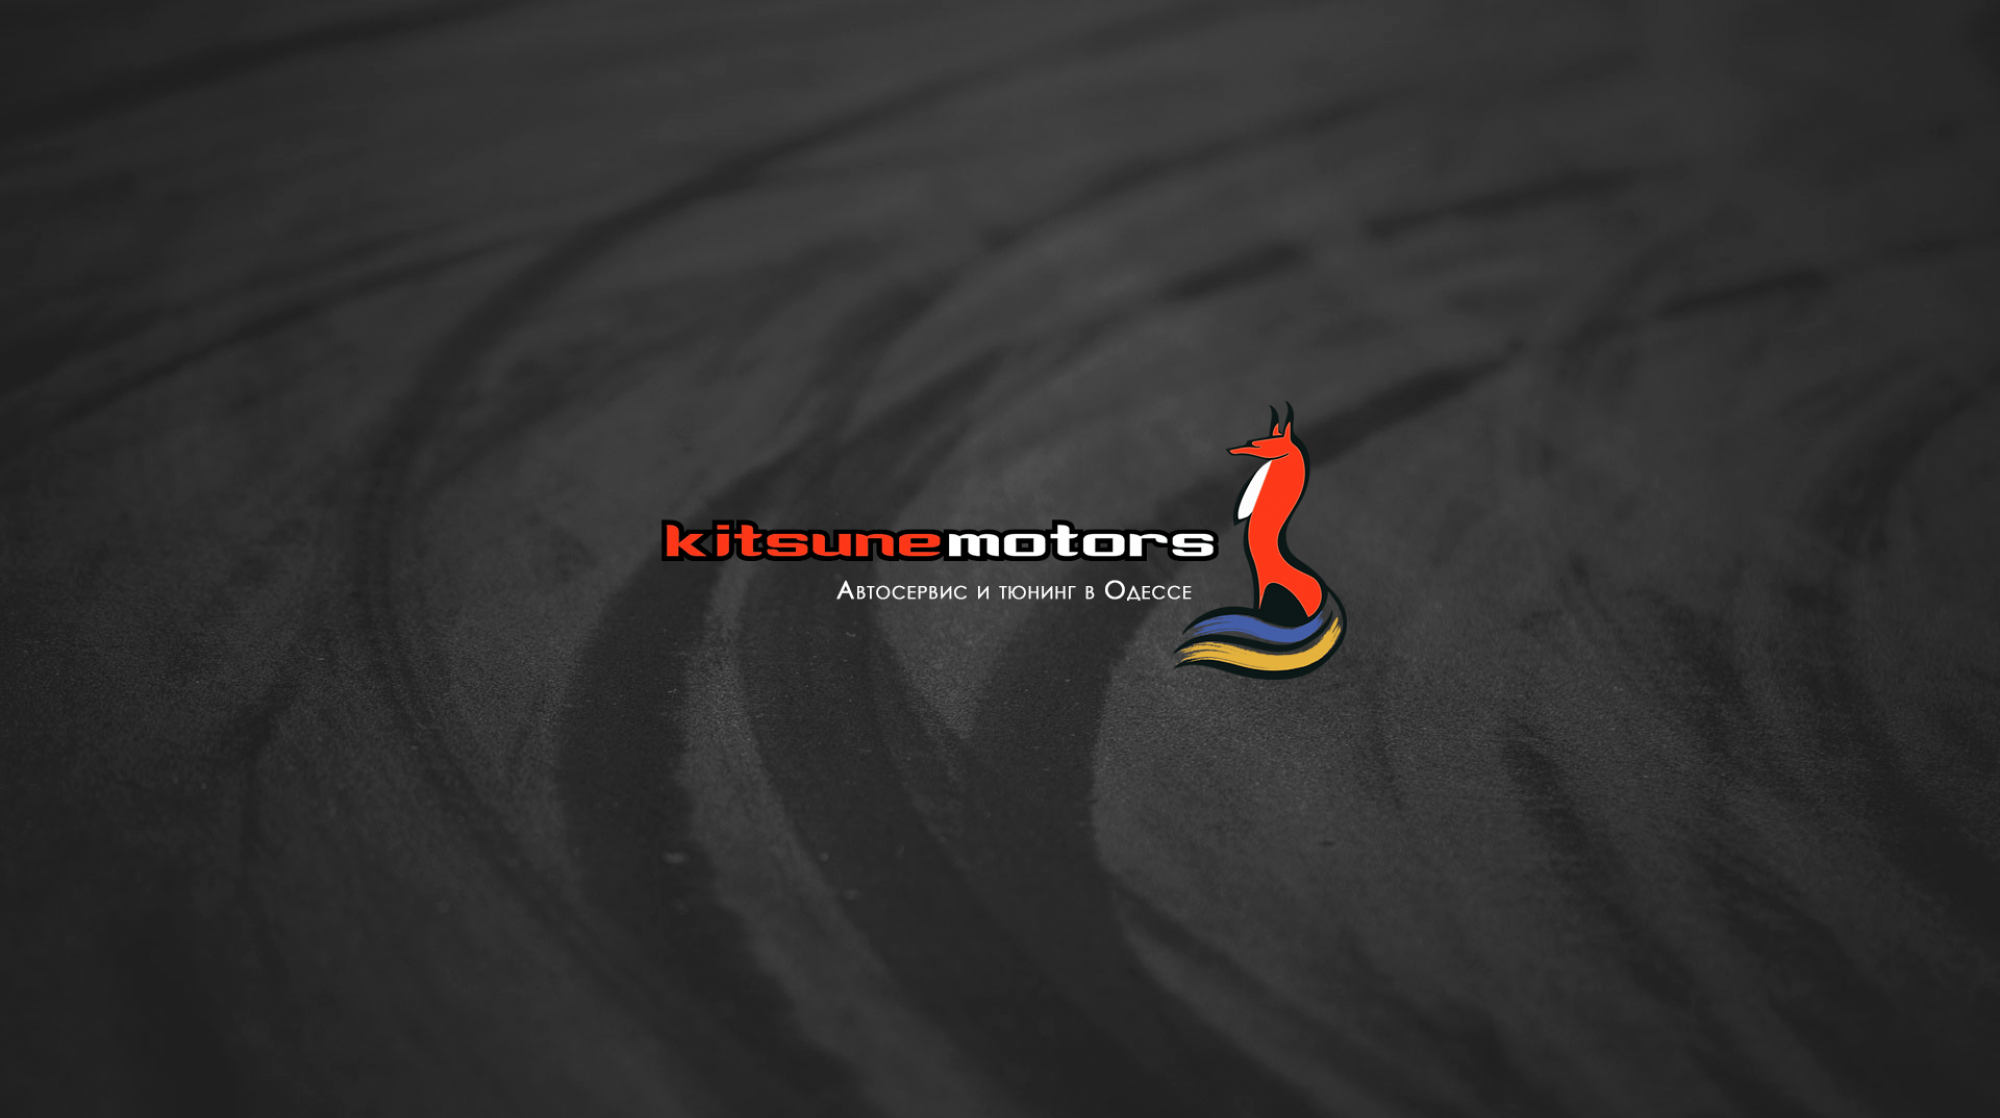 Kitsune Motors